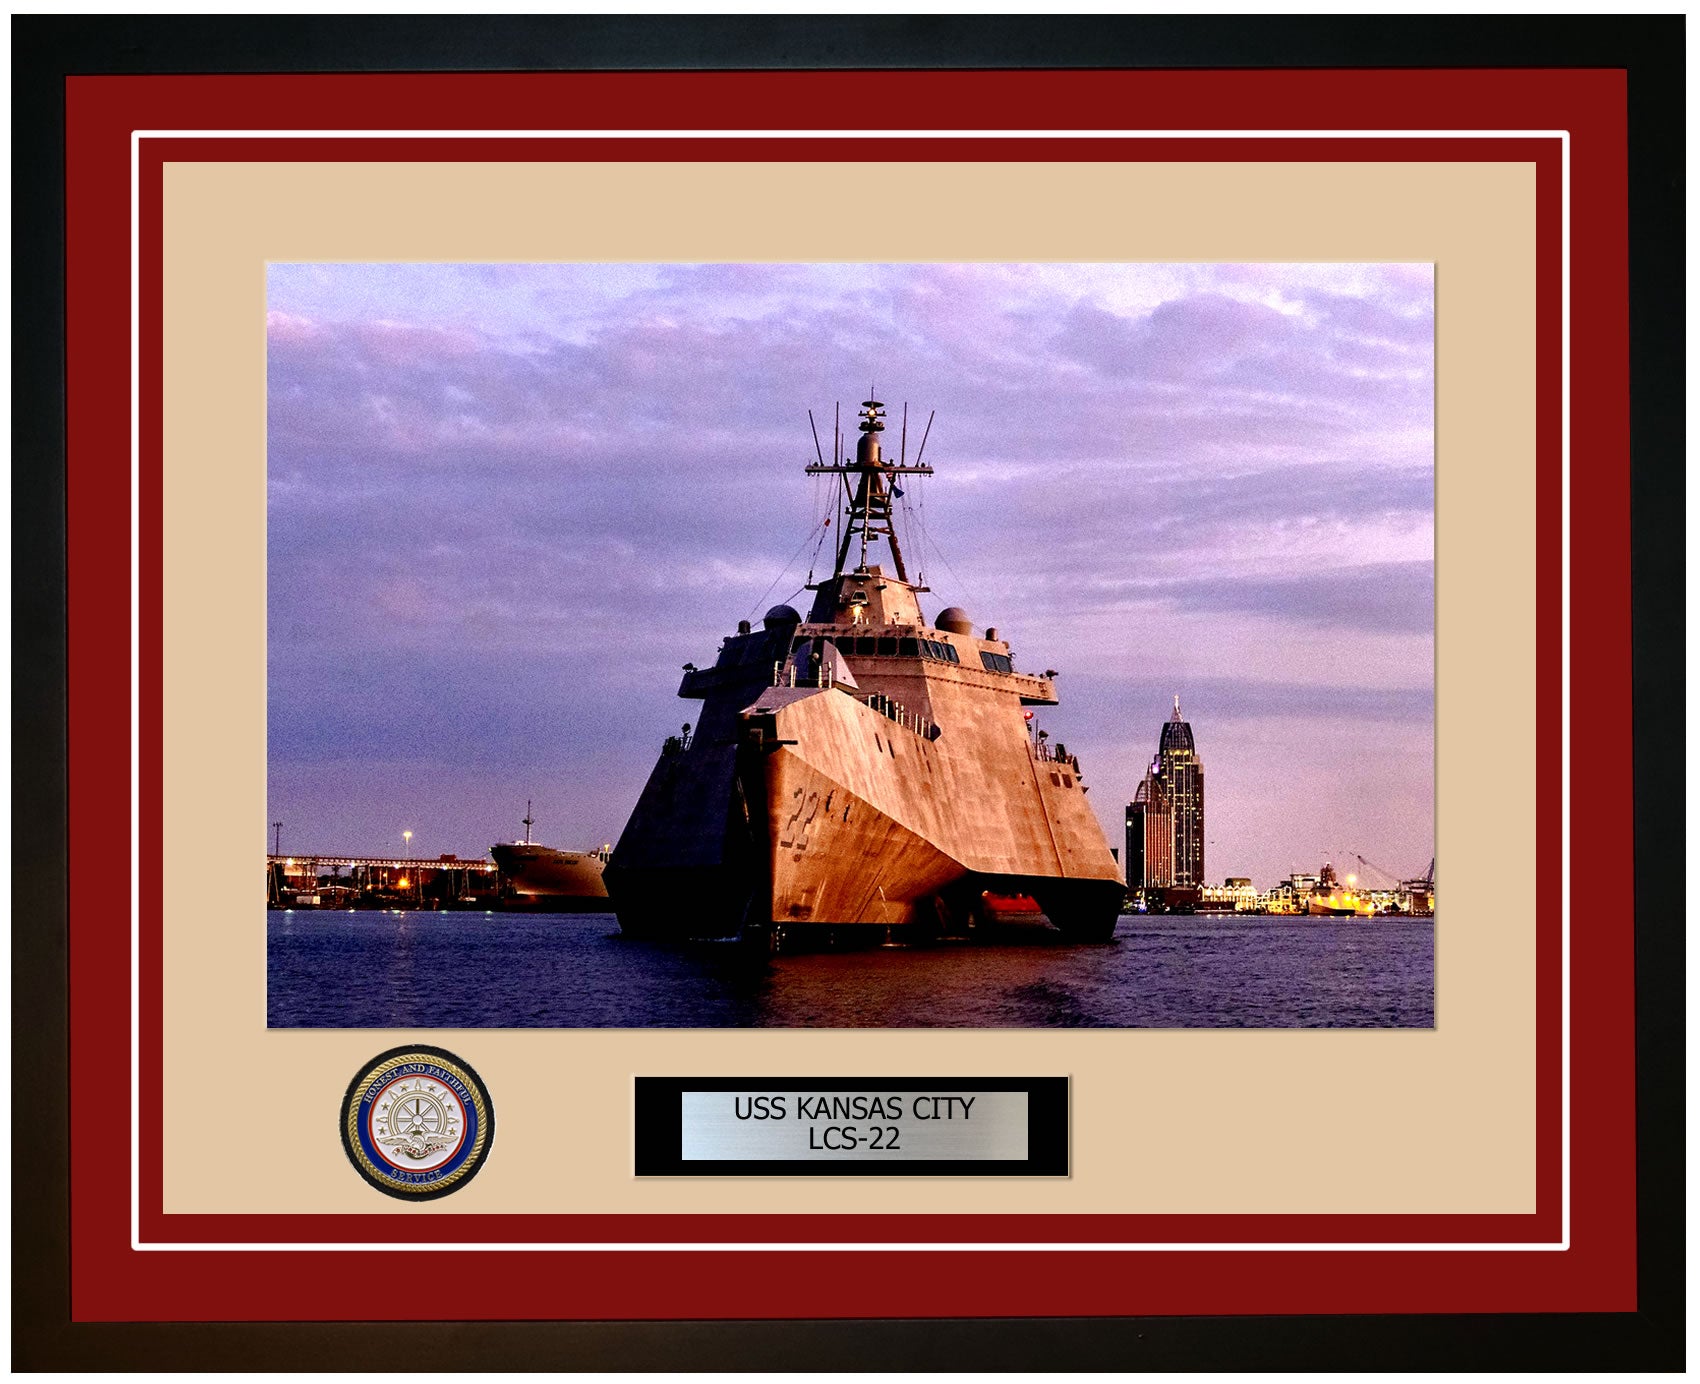 USS Kansas City LCS-22 Framed Navy Ship Photo Burgundy